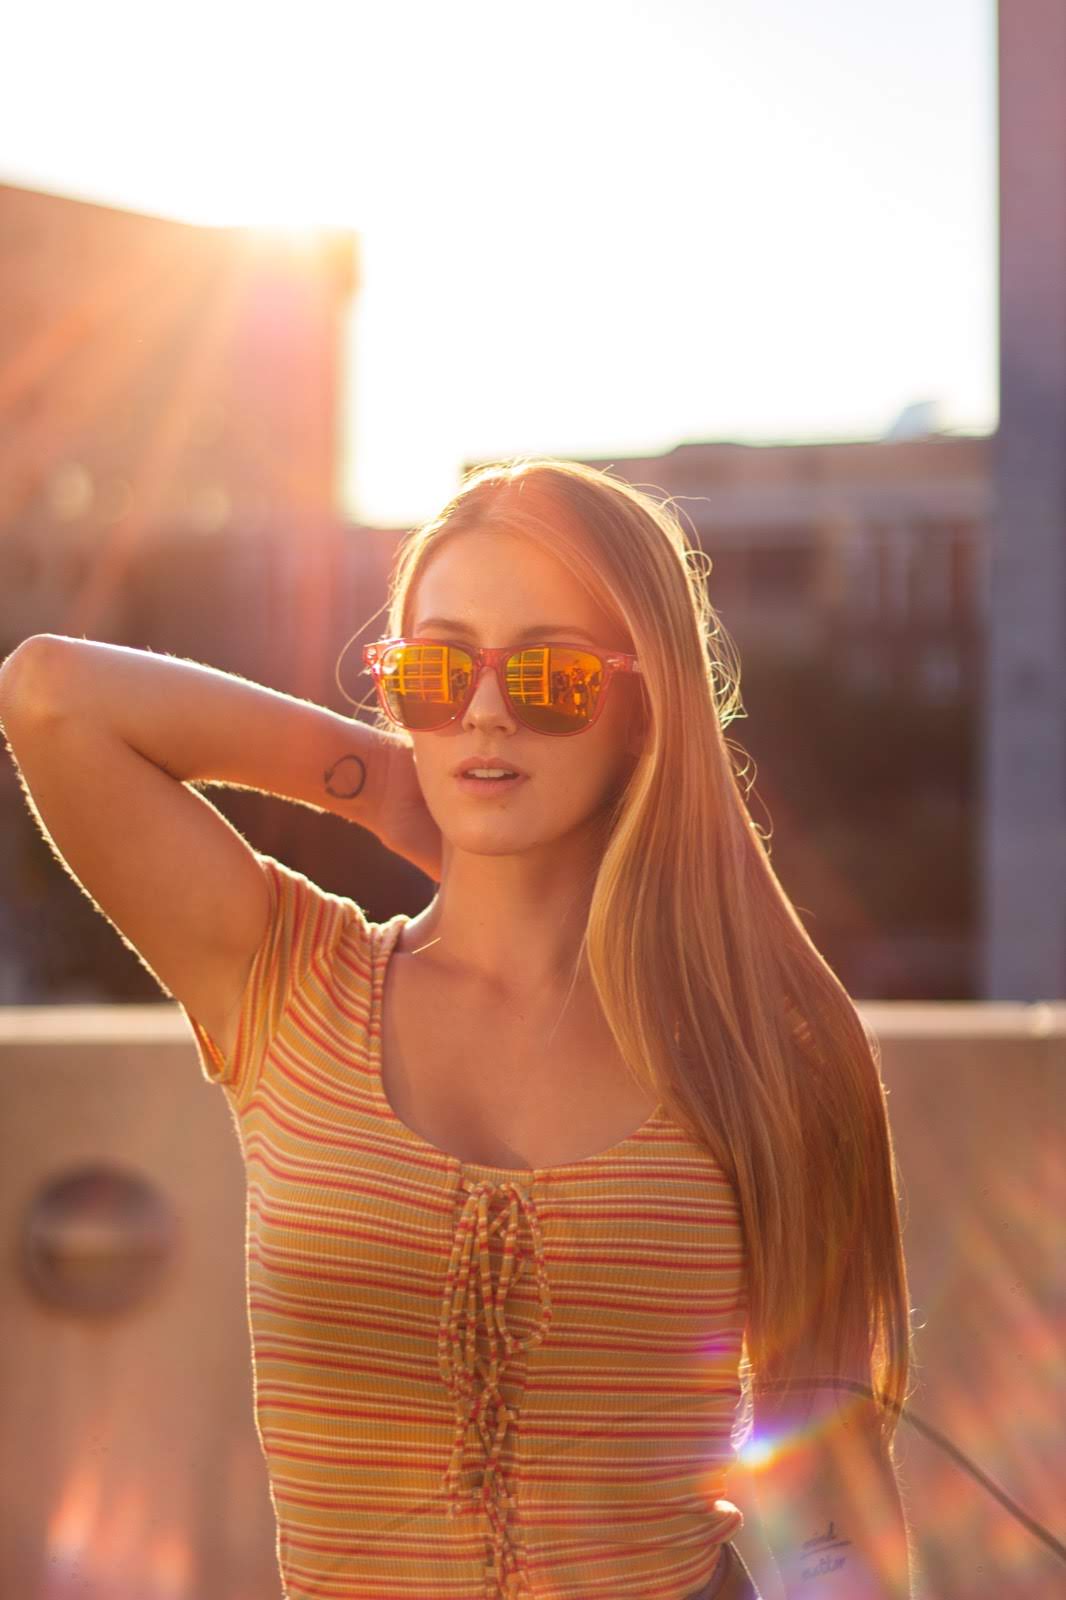 Women Posing with Sunglasses